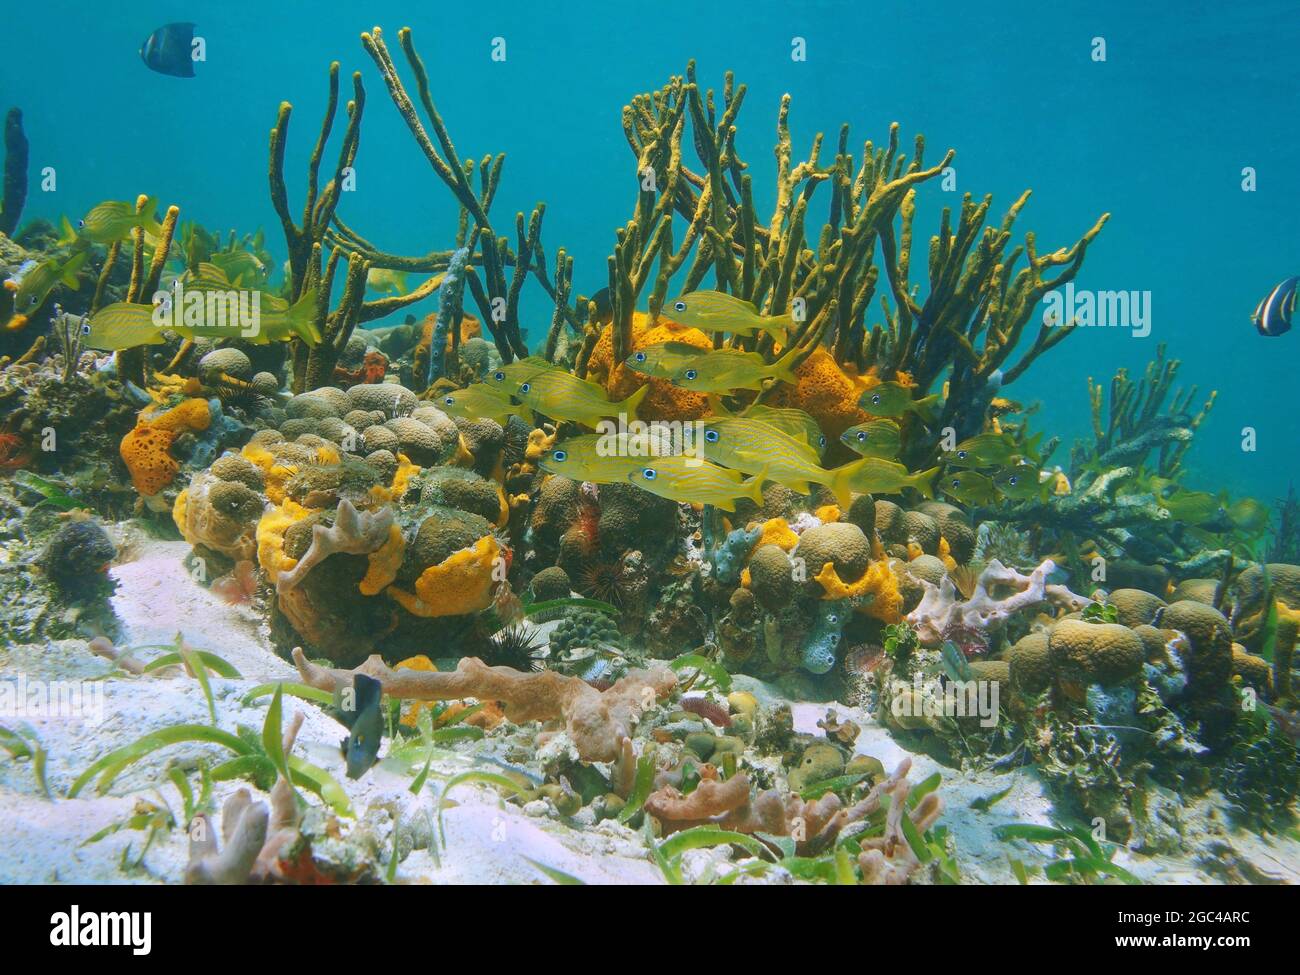 Peces tropicales en un colorido arrecife de coral con esponjas de mar submarino Mar Caribe, México Foto de stock